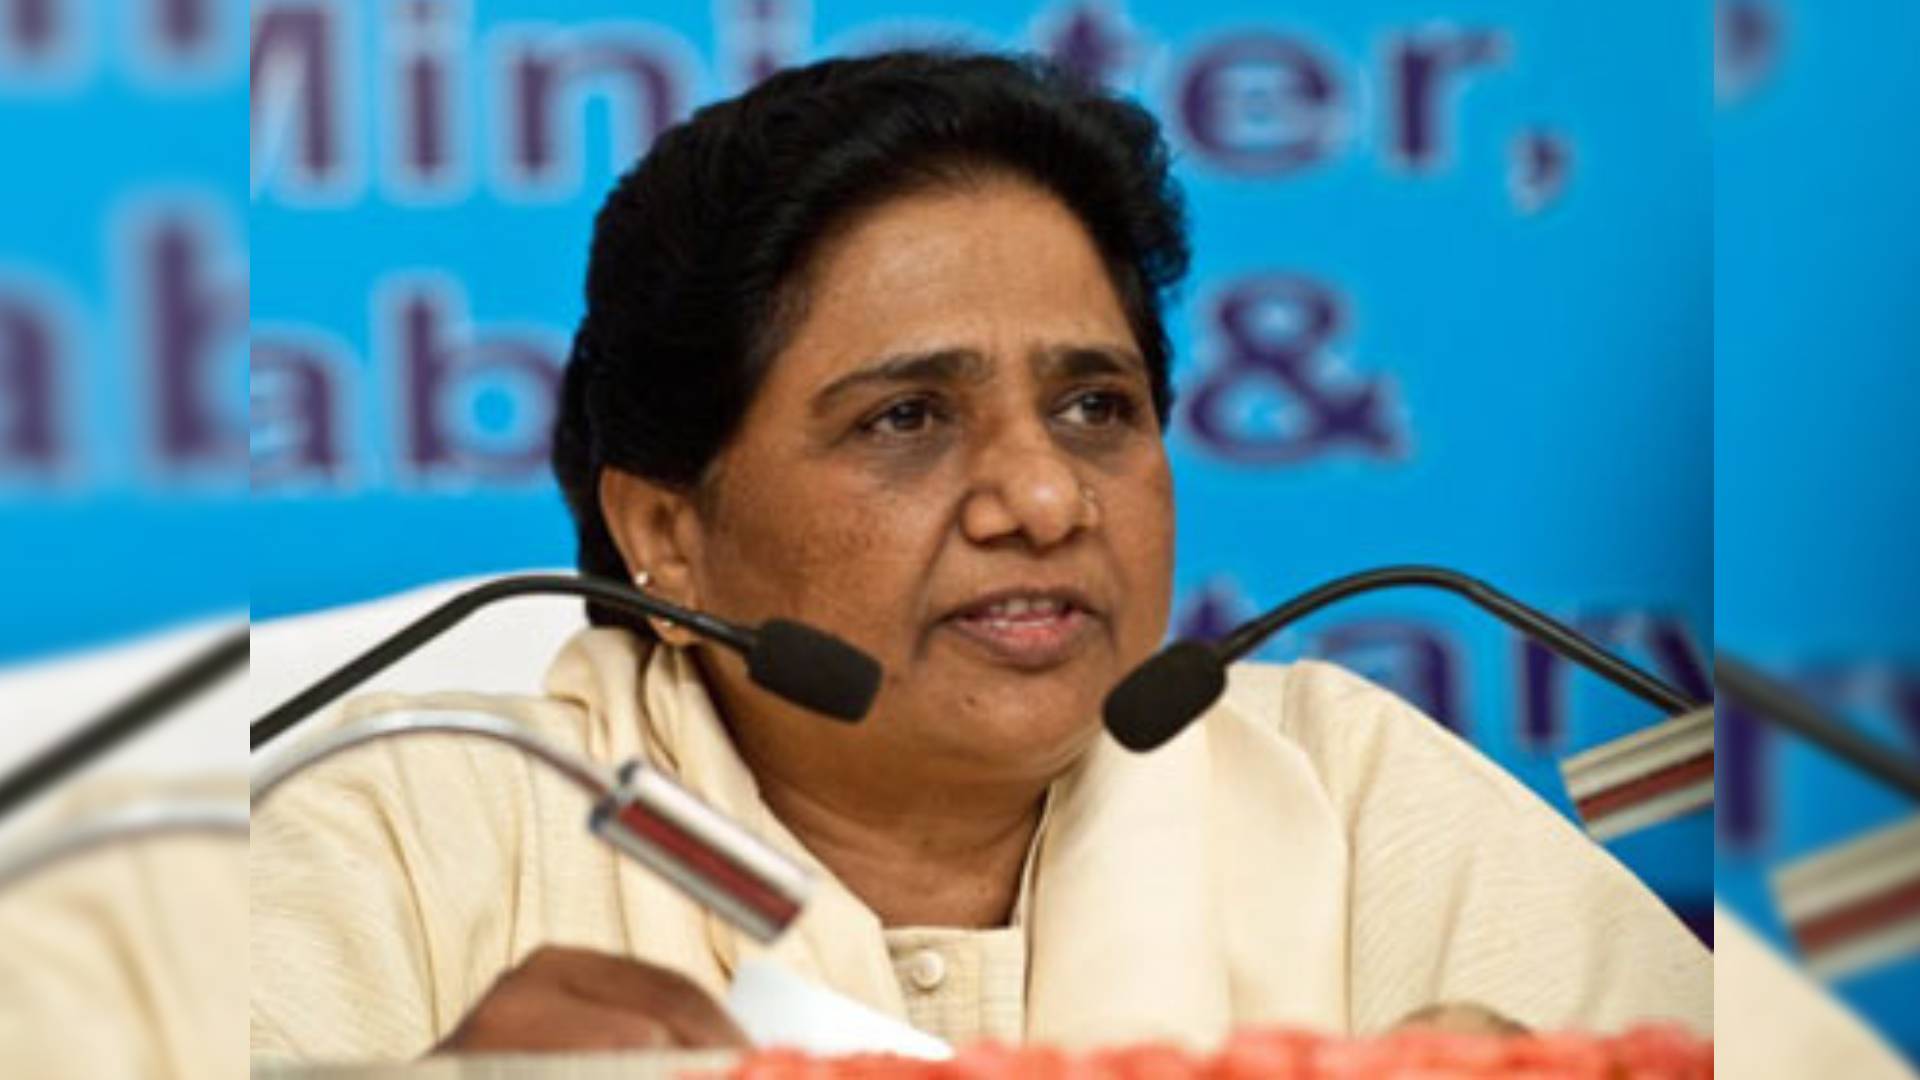 Mayawati slams BJP on electoral bonds, says no 'jumla' or guarantee will help it win polls